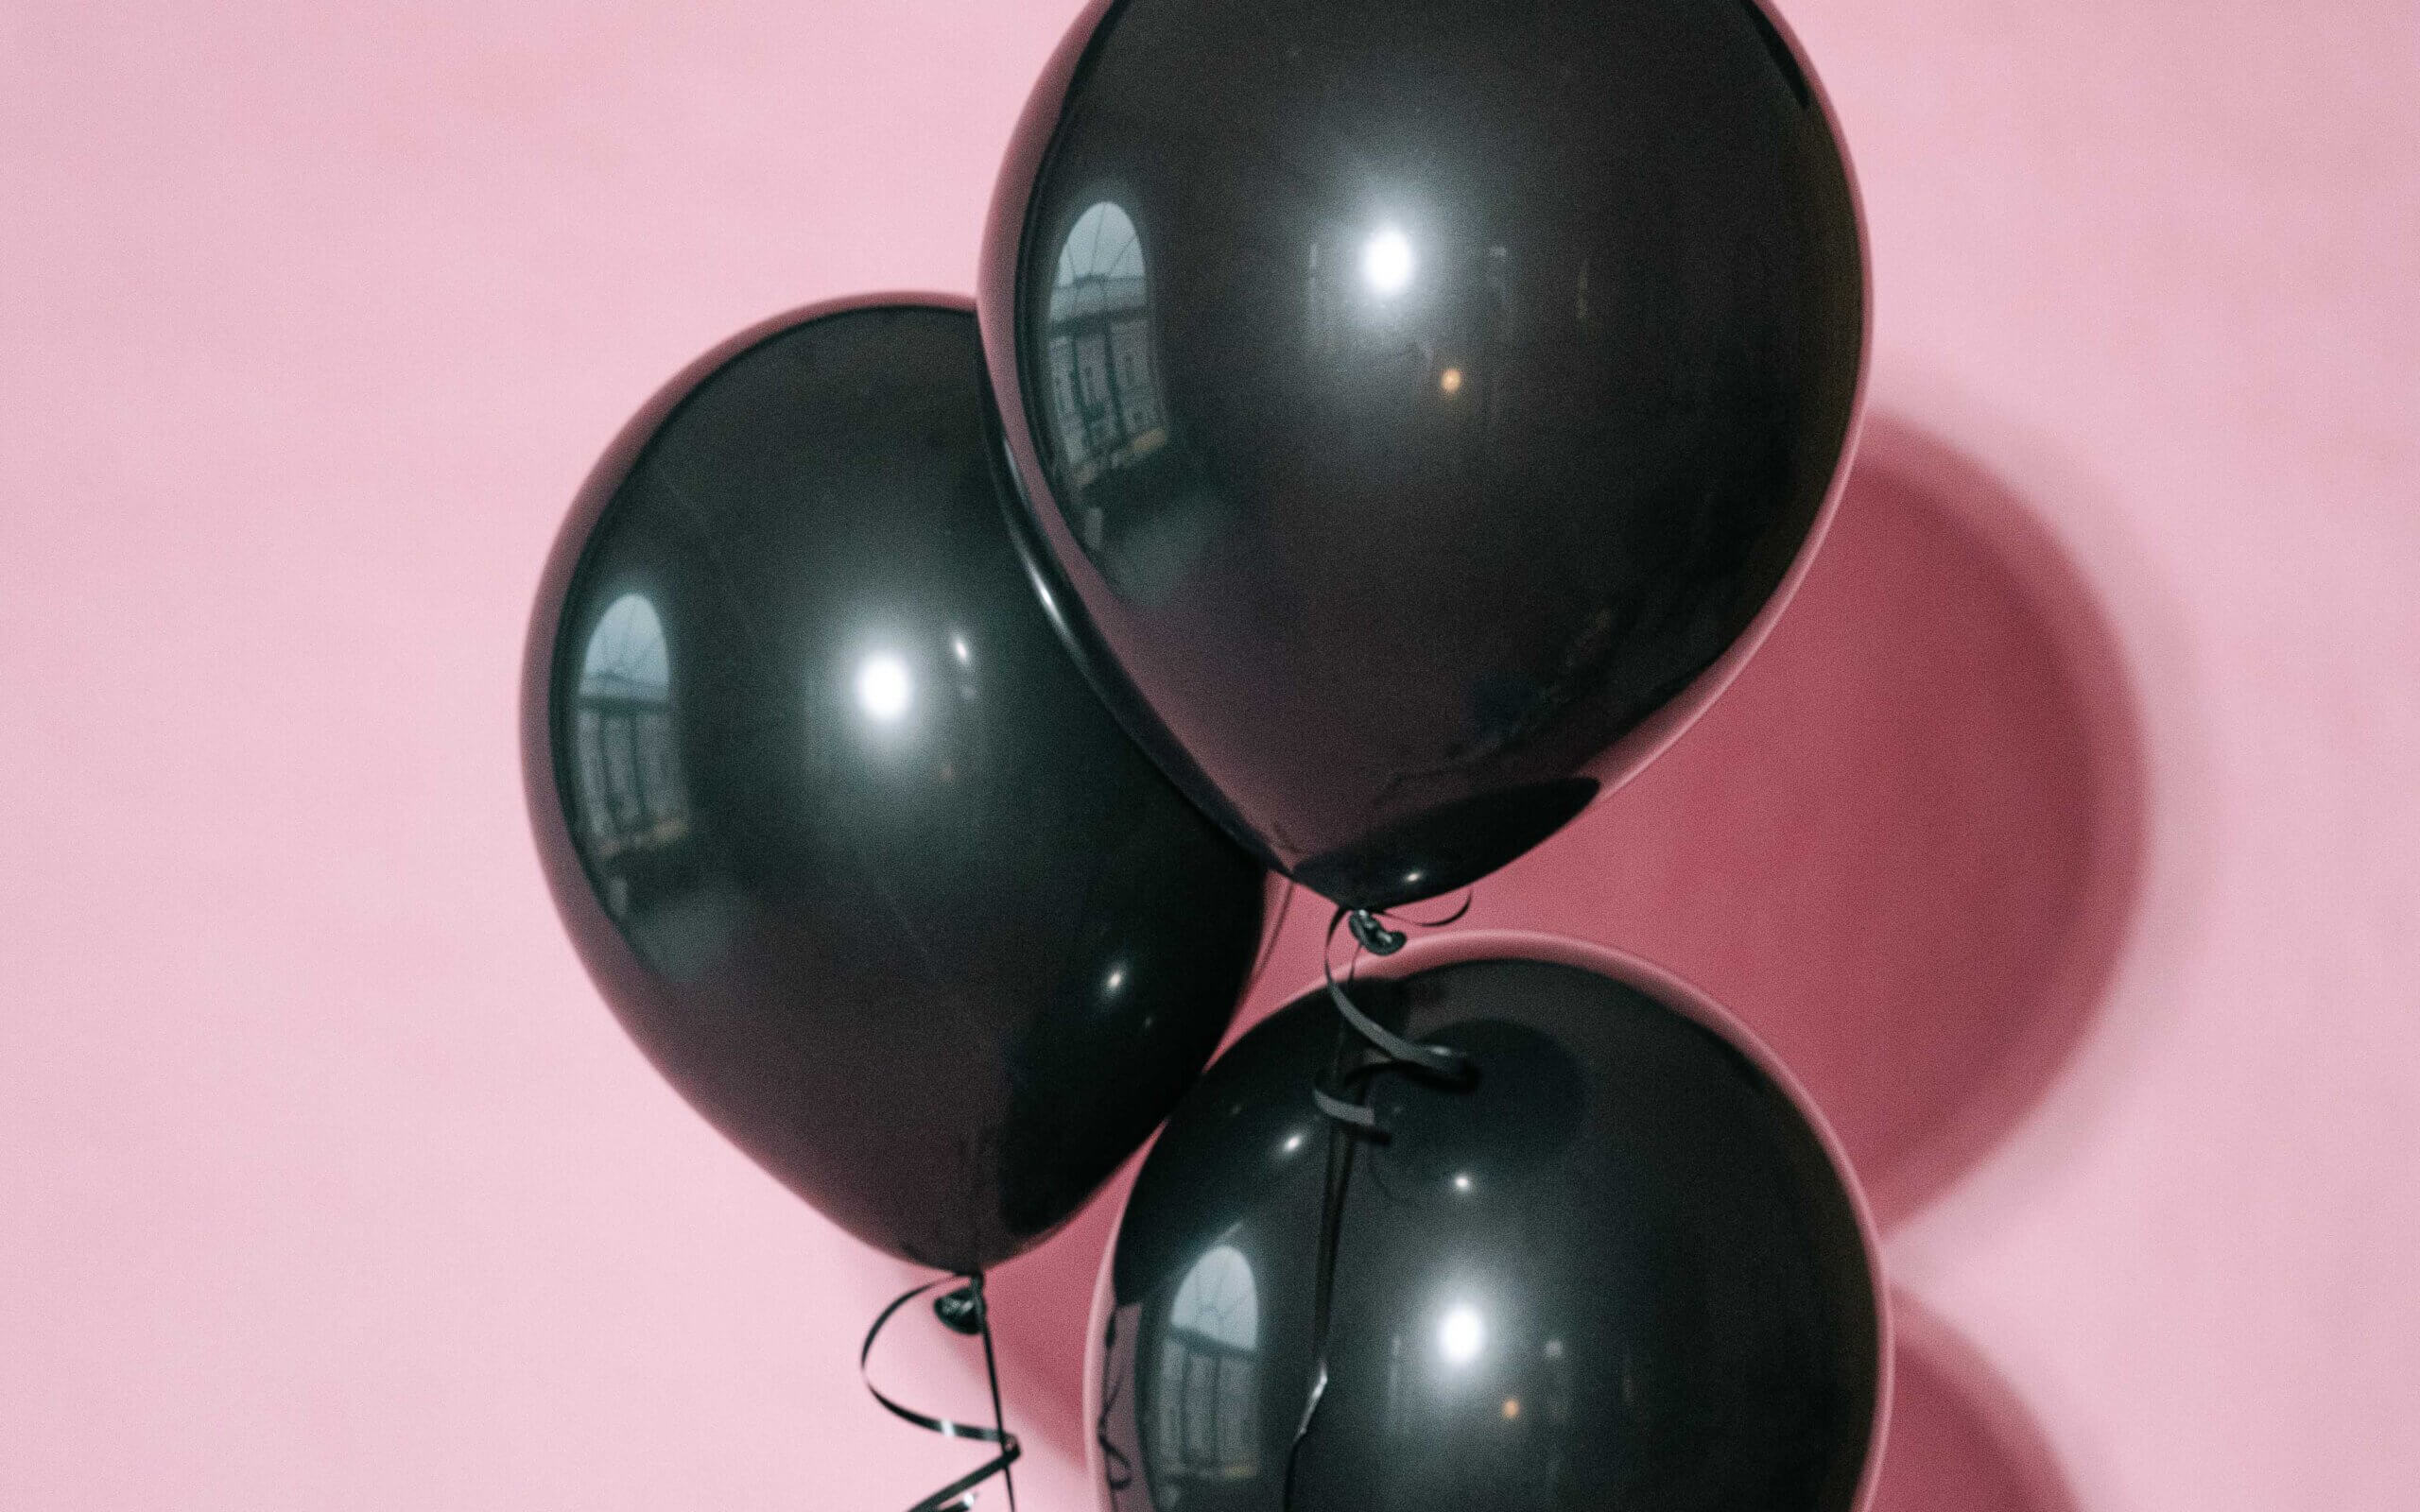 Three black balloons